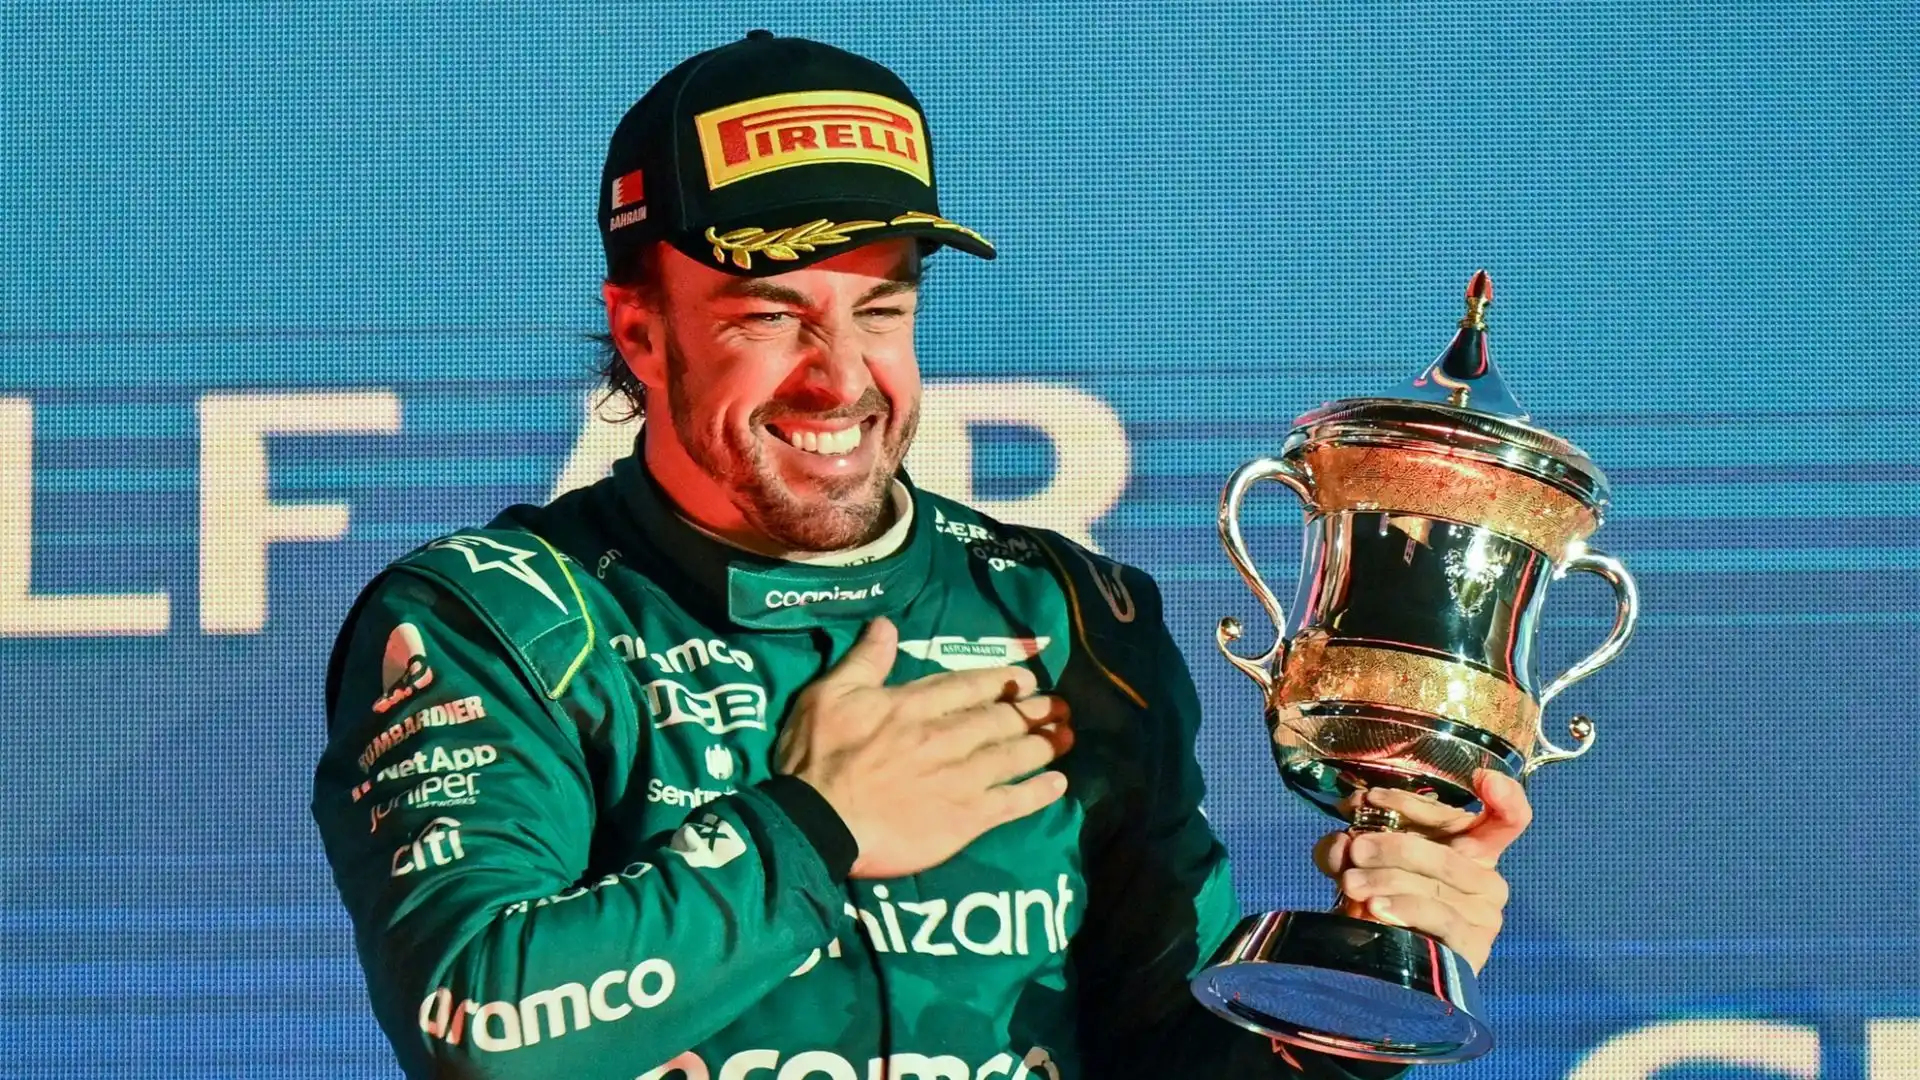 Alonso è il pilota più esperto in F1, con ben 383 Gran Premi disputati in carriera